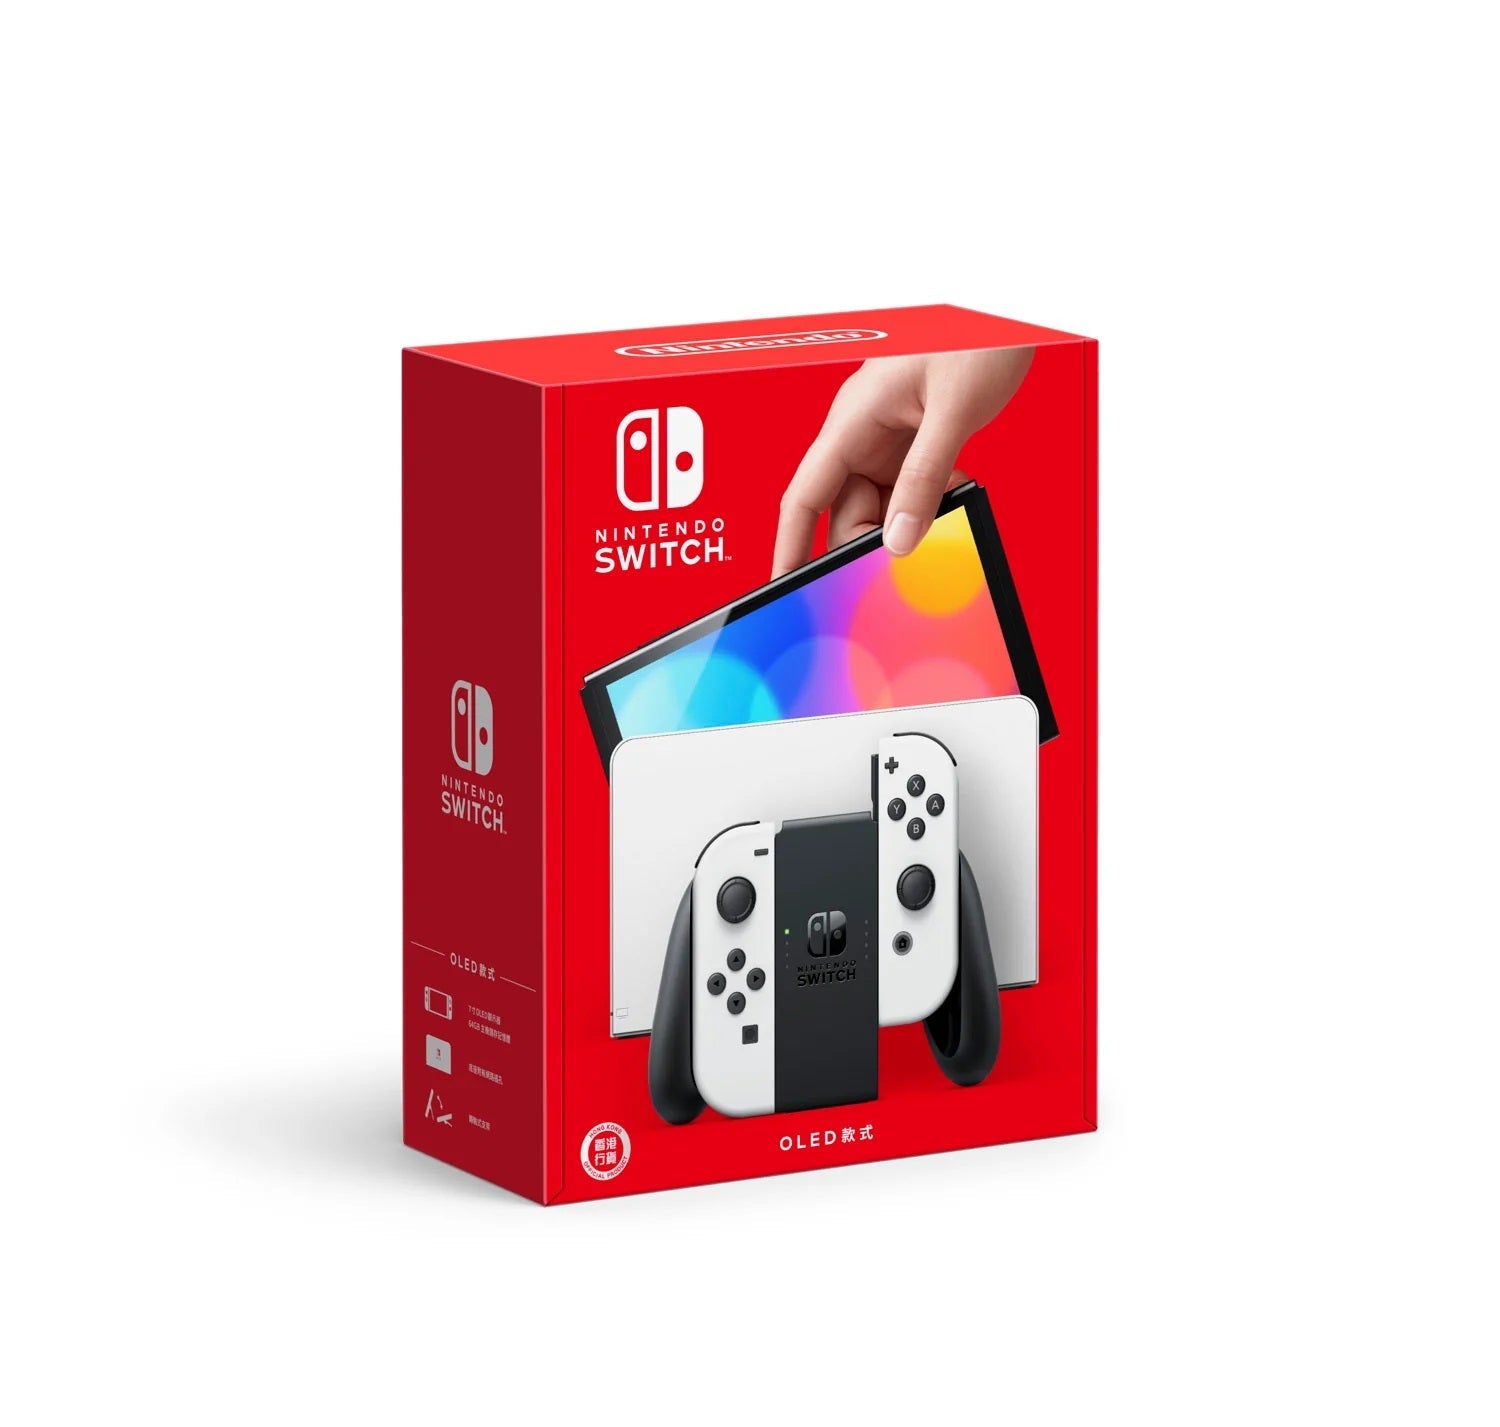 Nintendo 任天堂 Switch OLED 遊戲主機 - Fever Electrics 電器熱網購平台